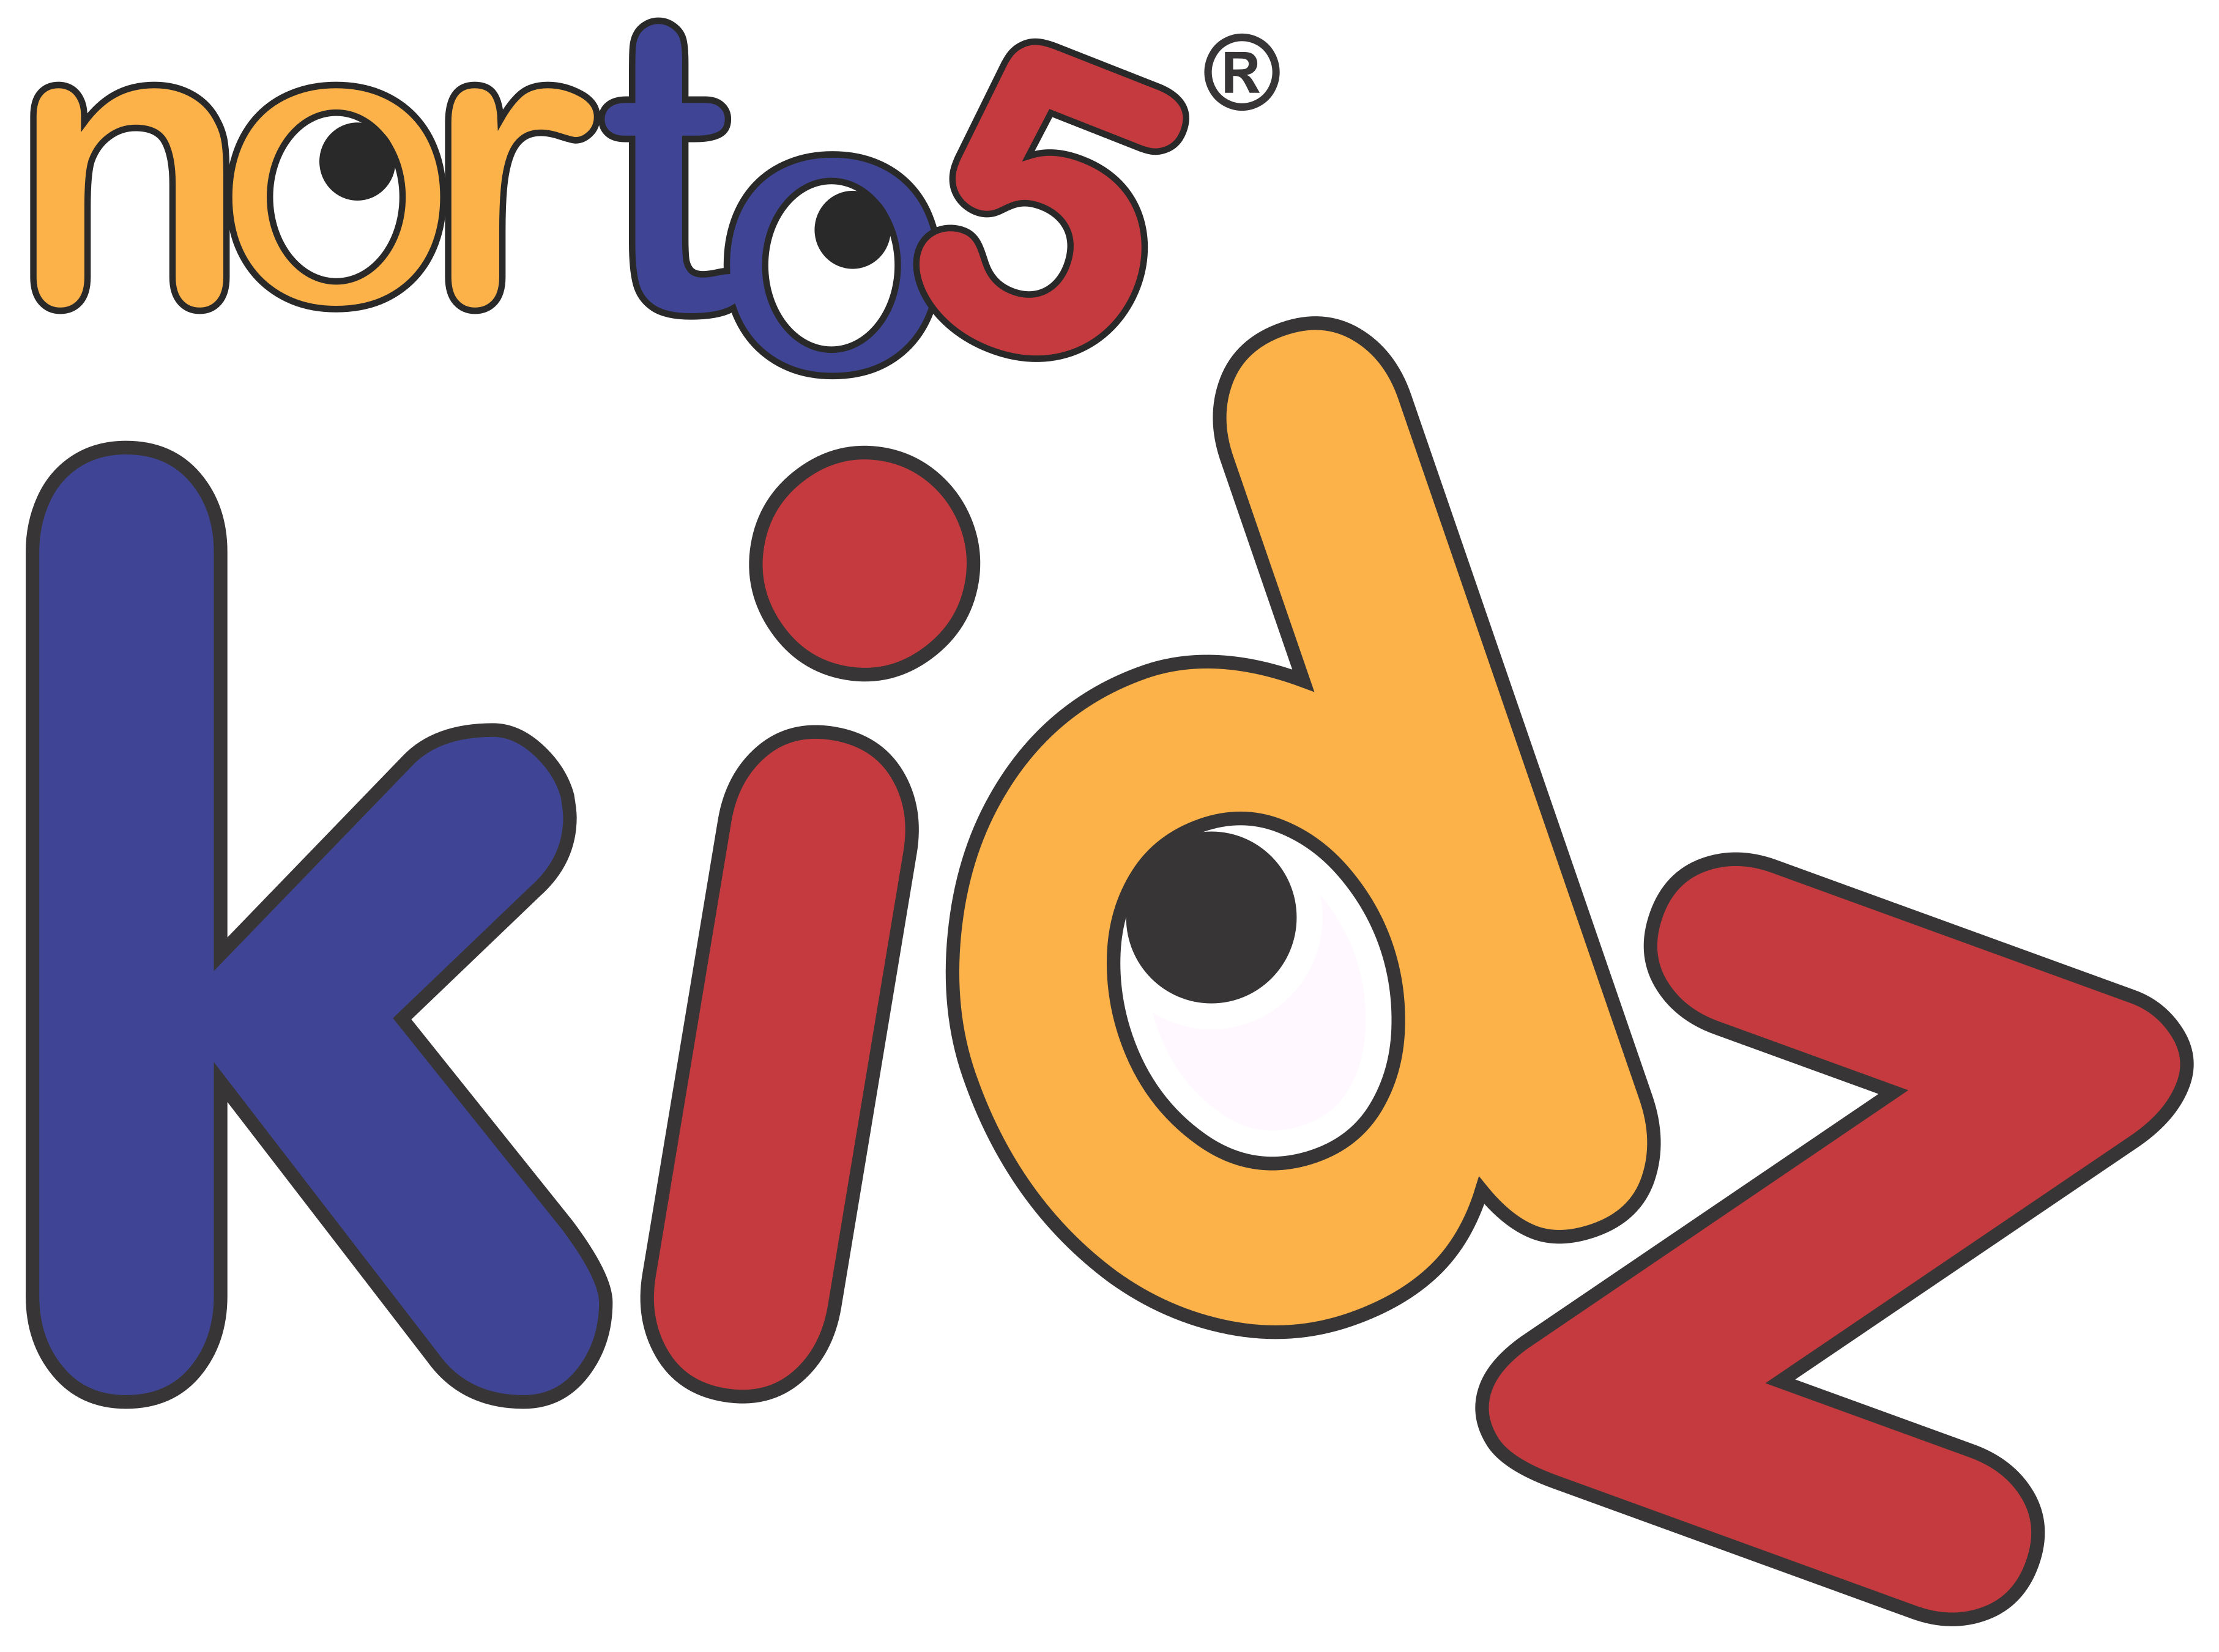 Norto5 Kidz Logo - Logo (3627x2701)